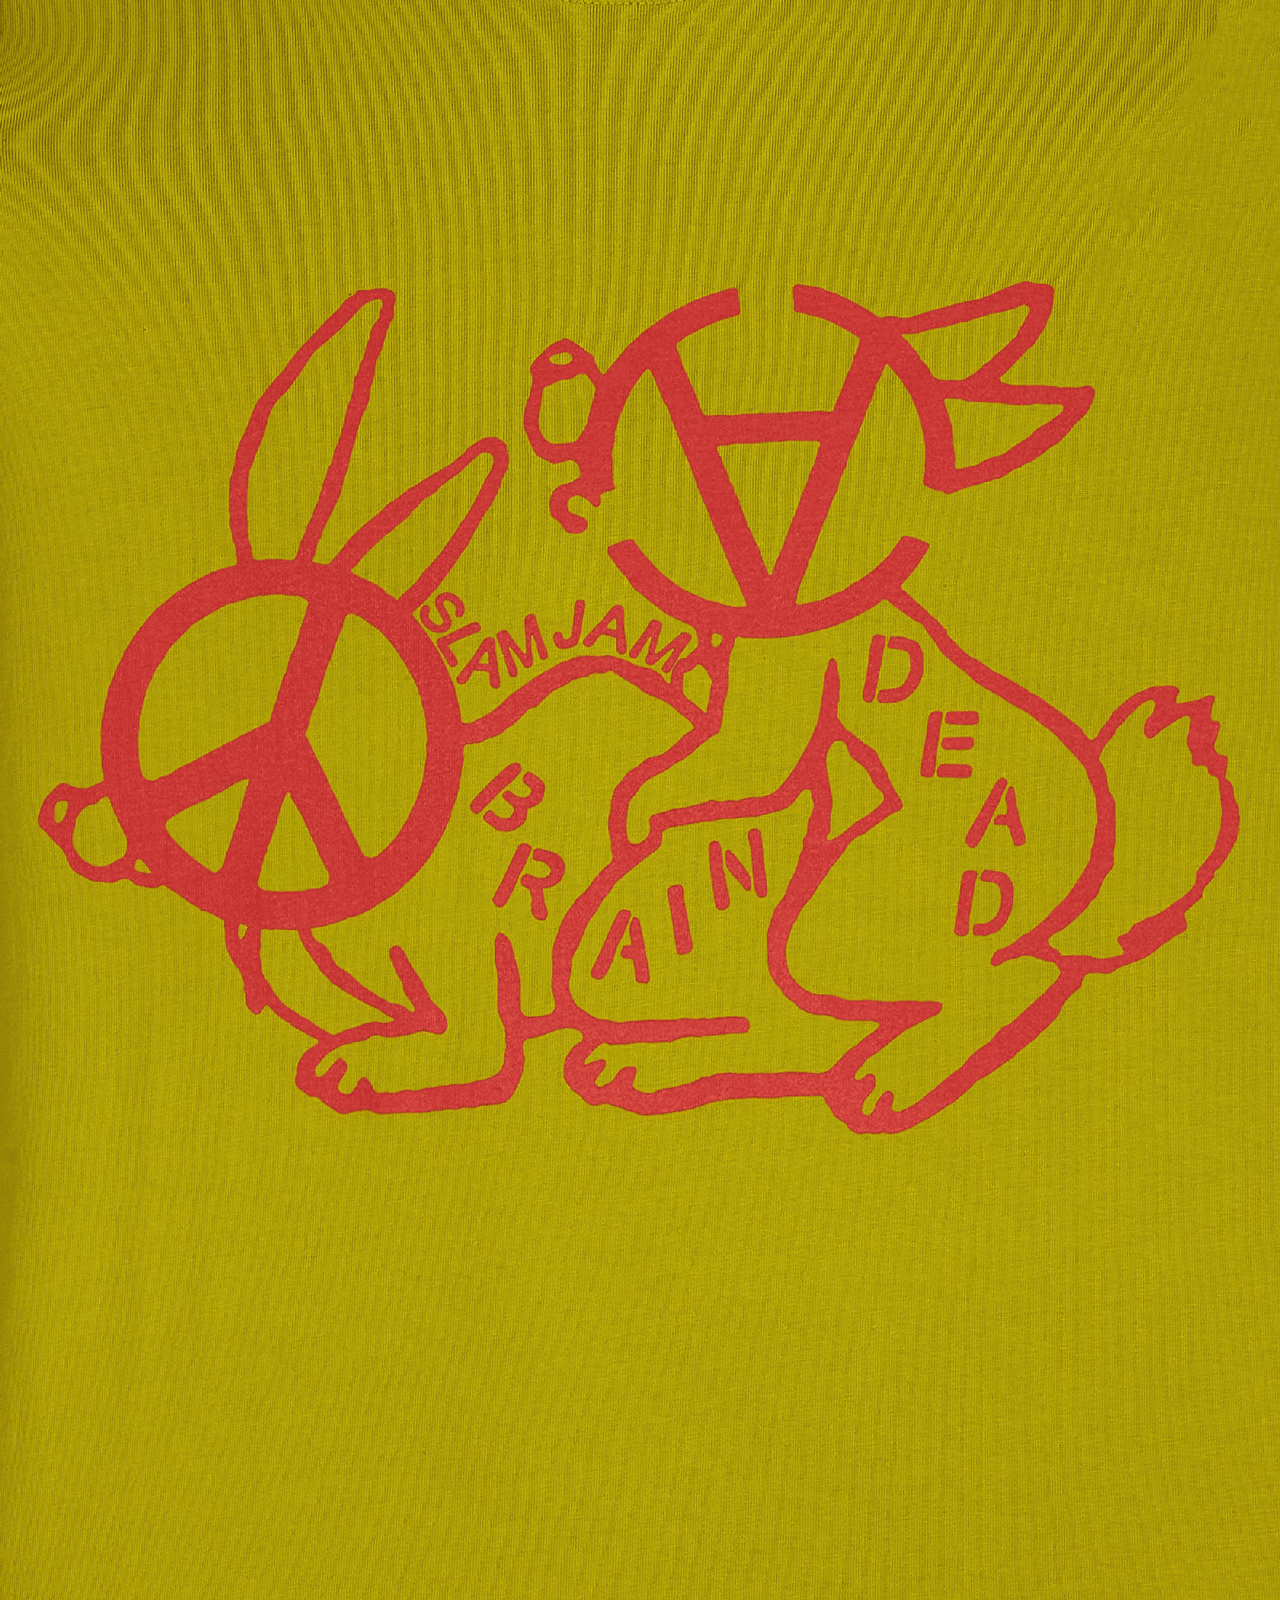 Brain Dead Anarchy Bunny Love Moss T-Shirts Shortsleeve BDSJBUNNYLOVETEE 002